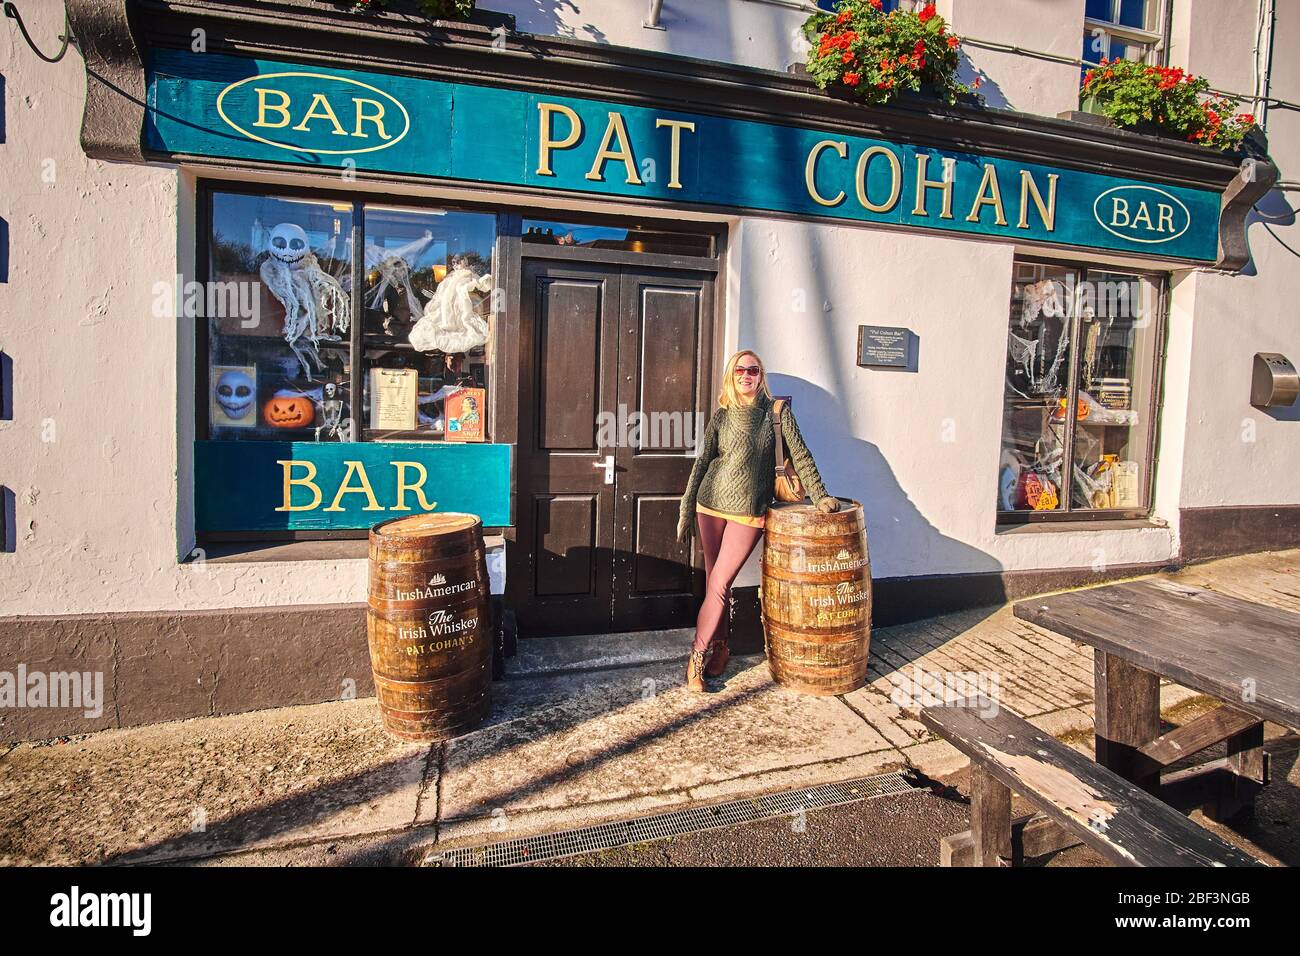 Pat Cohan's bar as featured in the Quiet Man film starring John Wayne Stock Photo